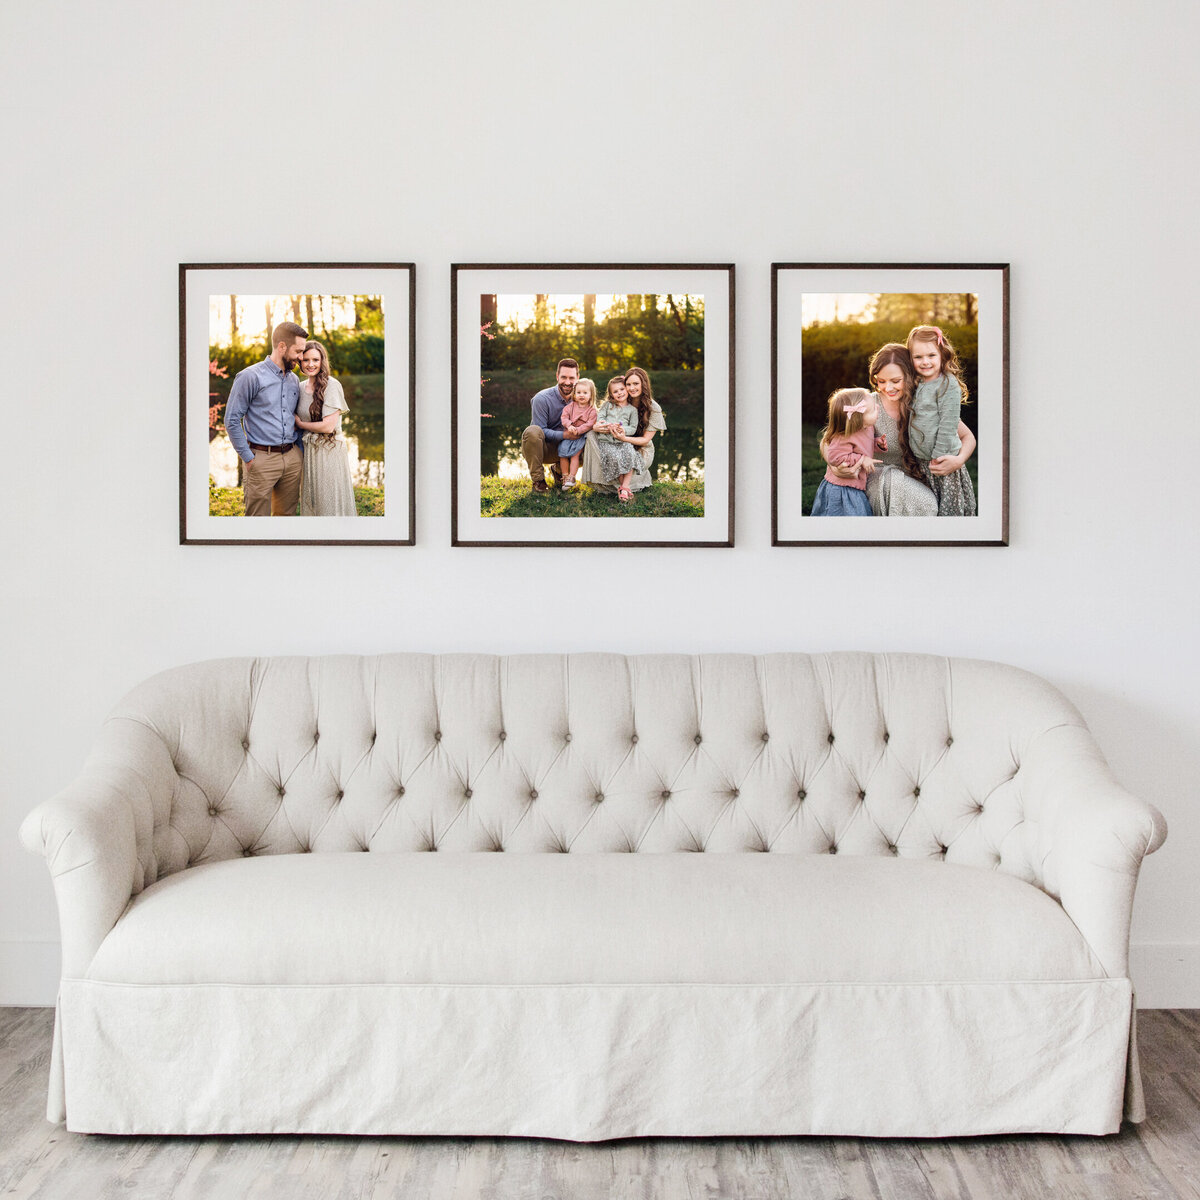 Photo Gallery wall arrangement